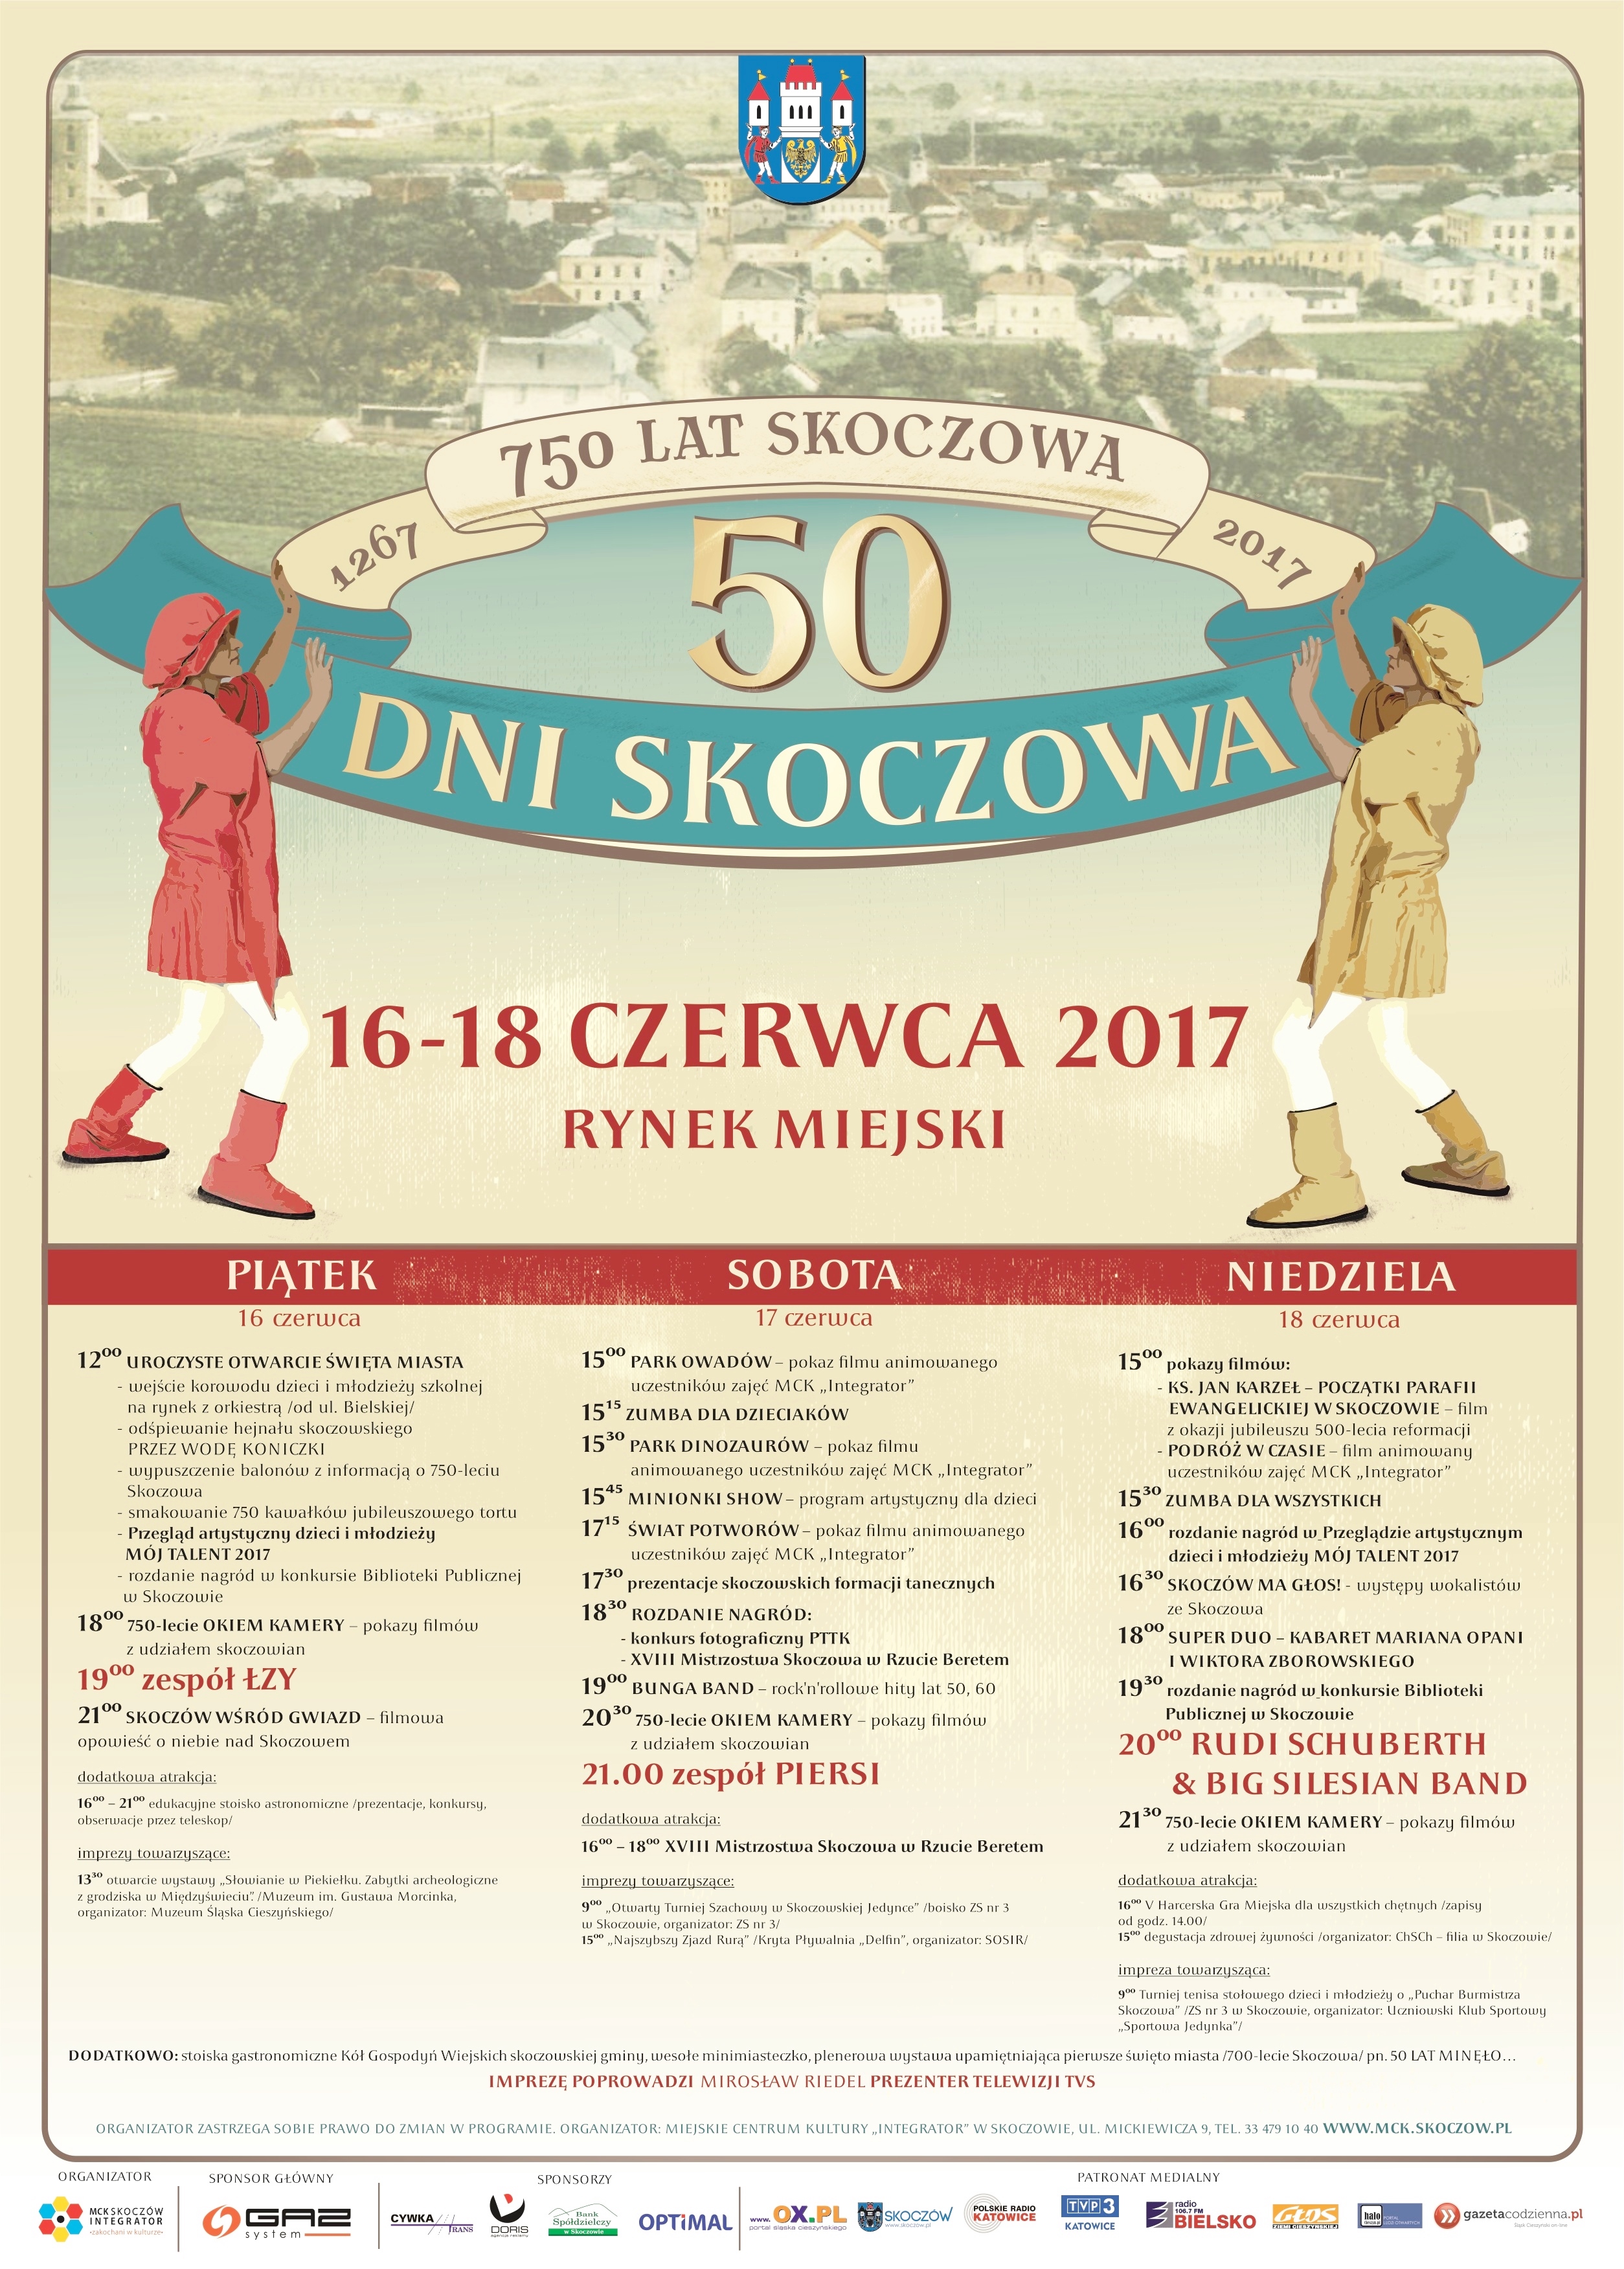 https://skoczow.bliskoserca.pl/aktualnosci/skoczow-dni-skoczowa-2017,2354